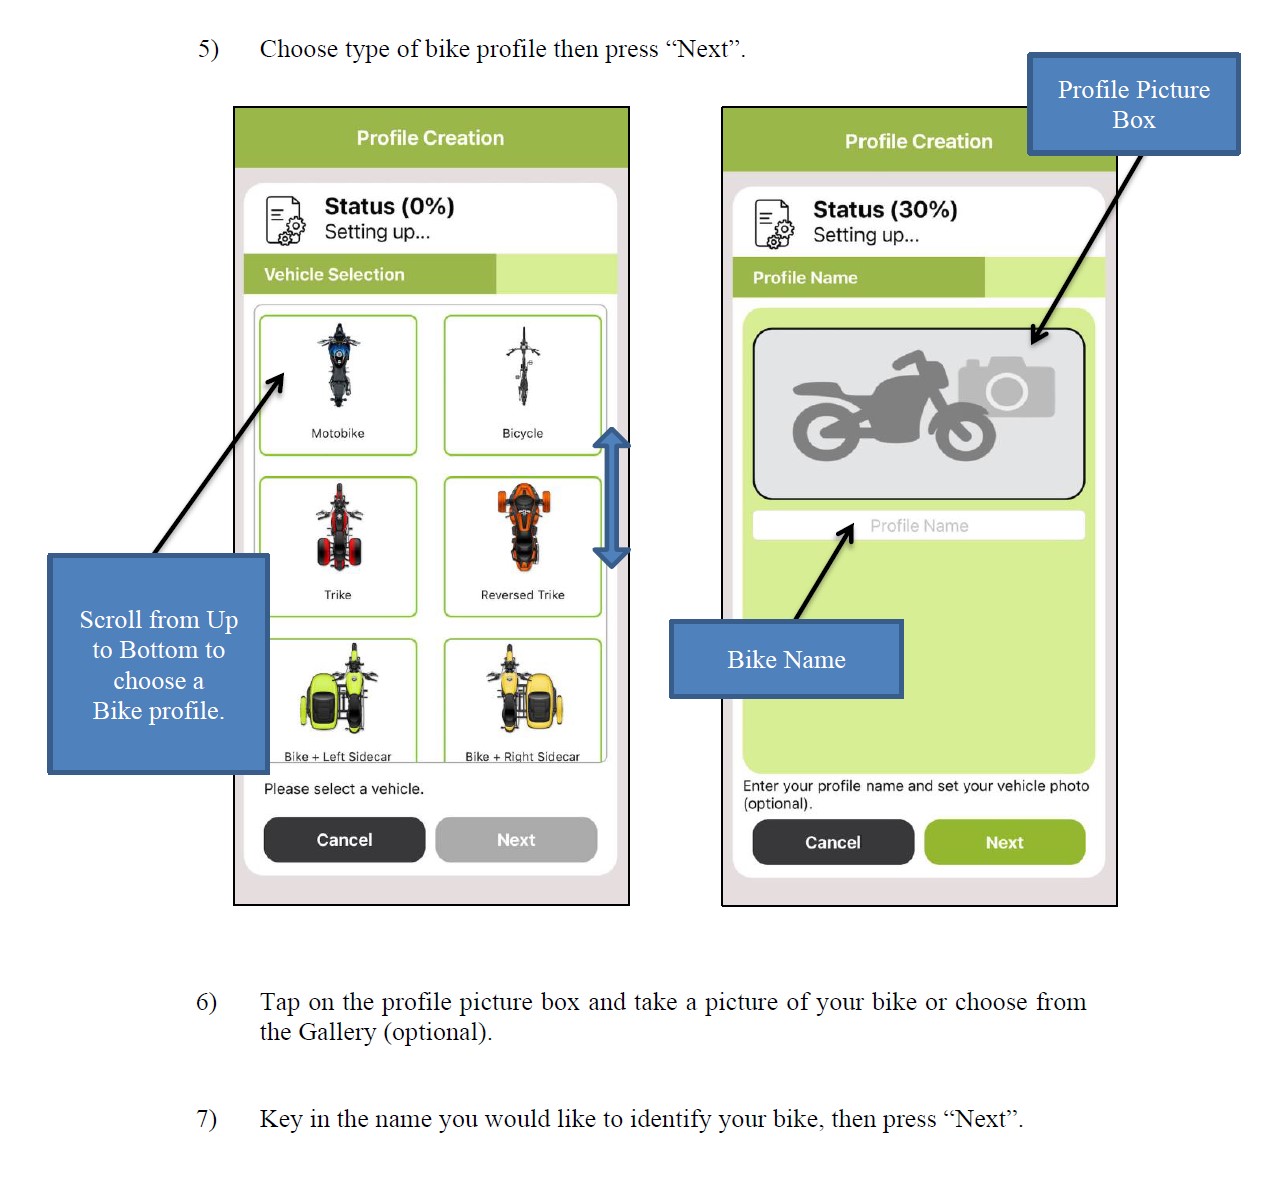 Profile creation on the FOBO Bike 2 TPMS app